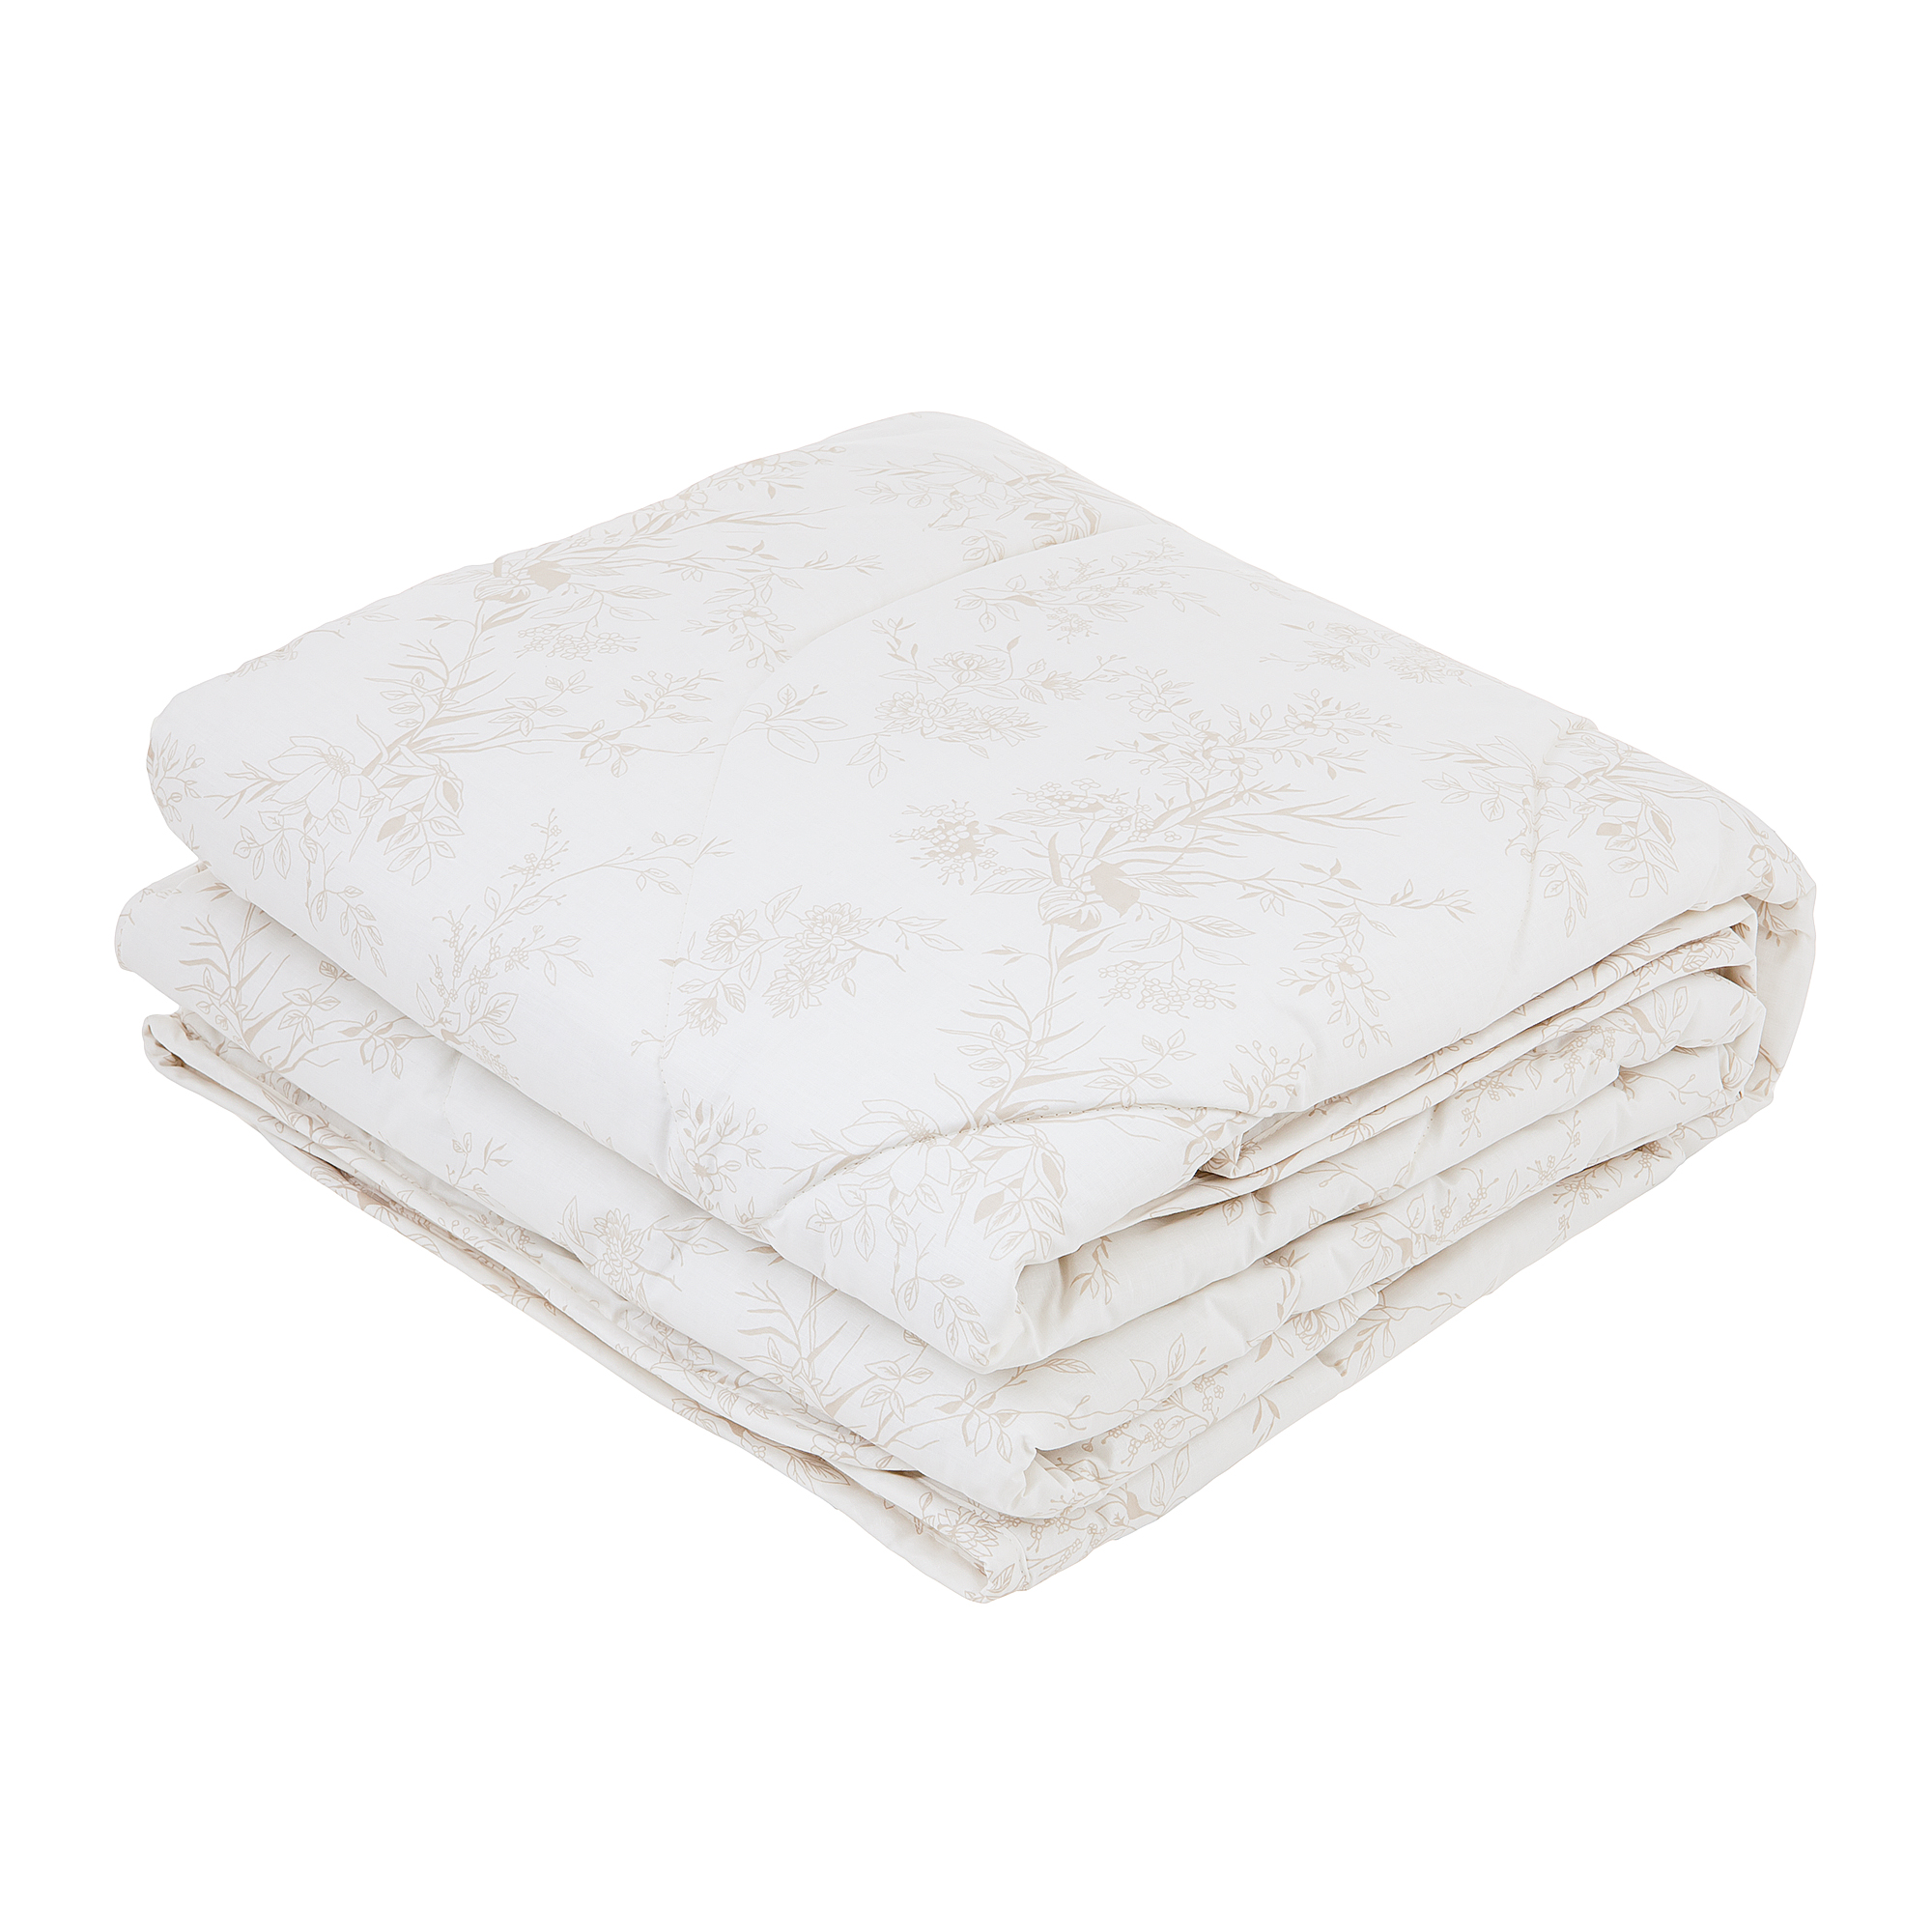 Одеяло Classic by T Хлопок-натурэль 200х210 одеяло зимнее medsleep swan princess белое 200х210 см